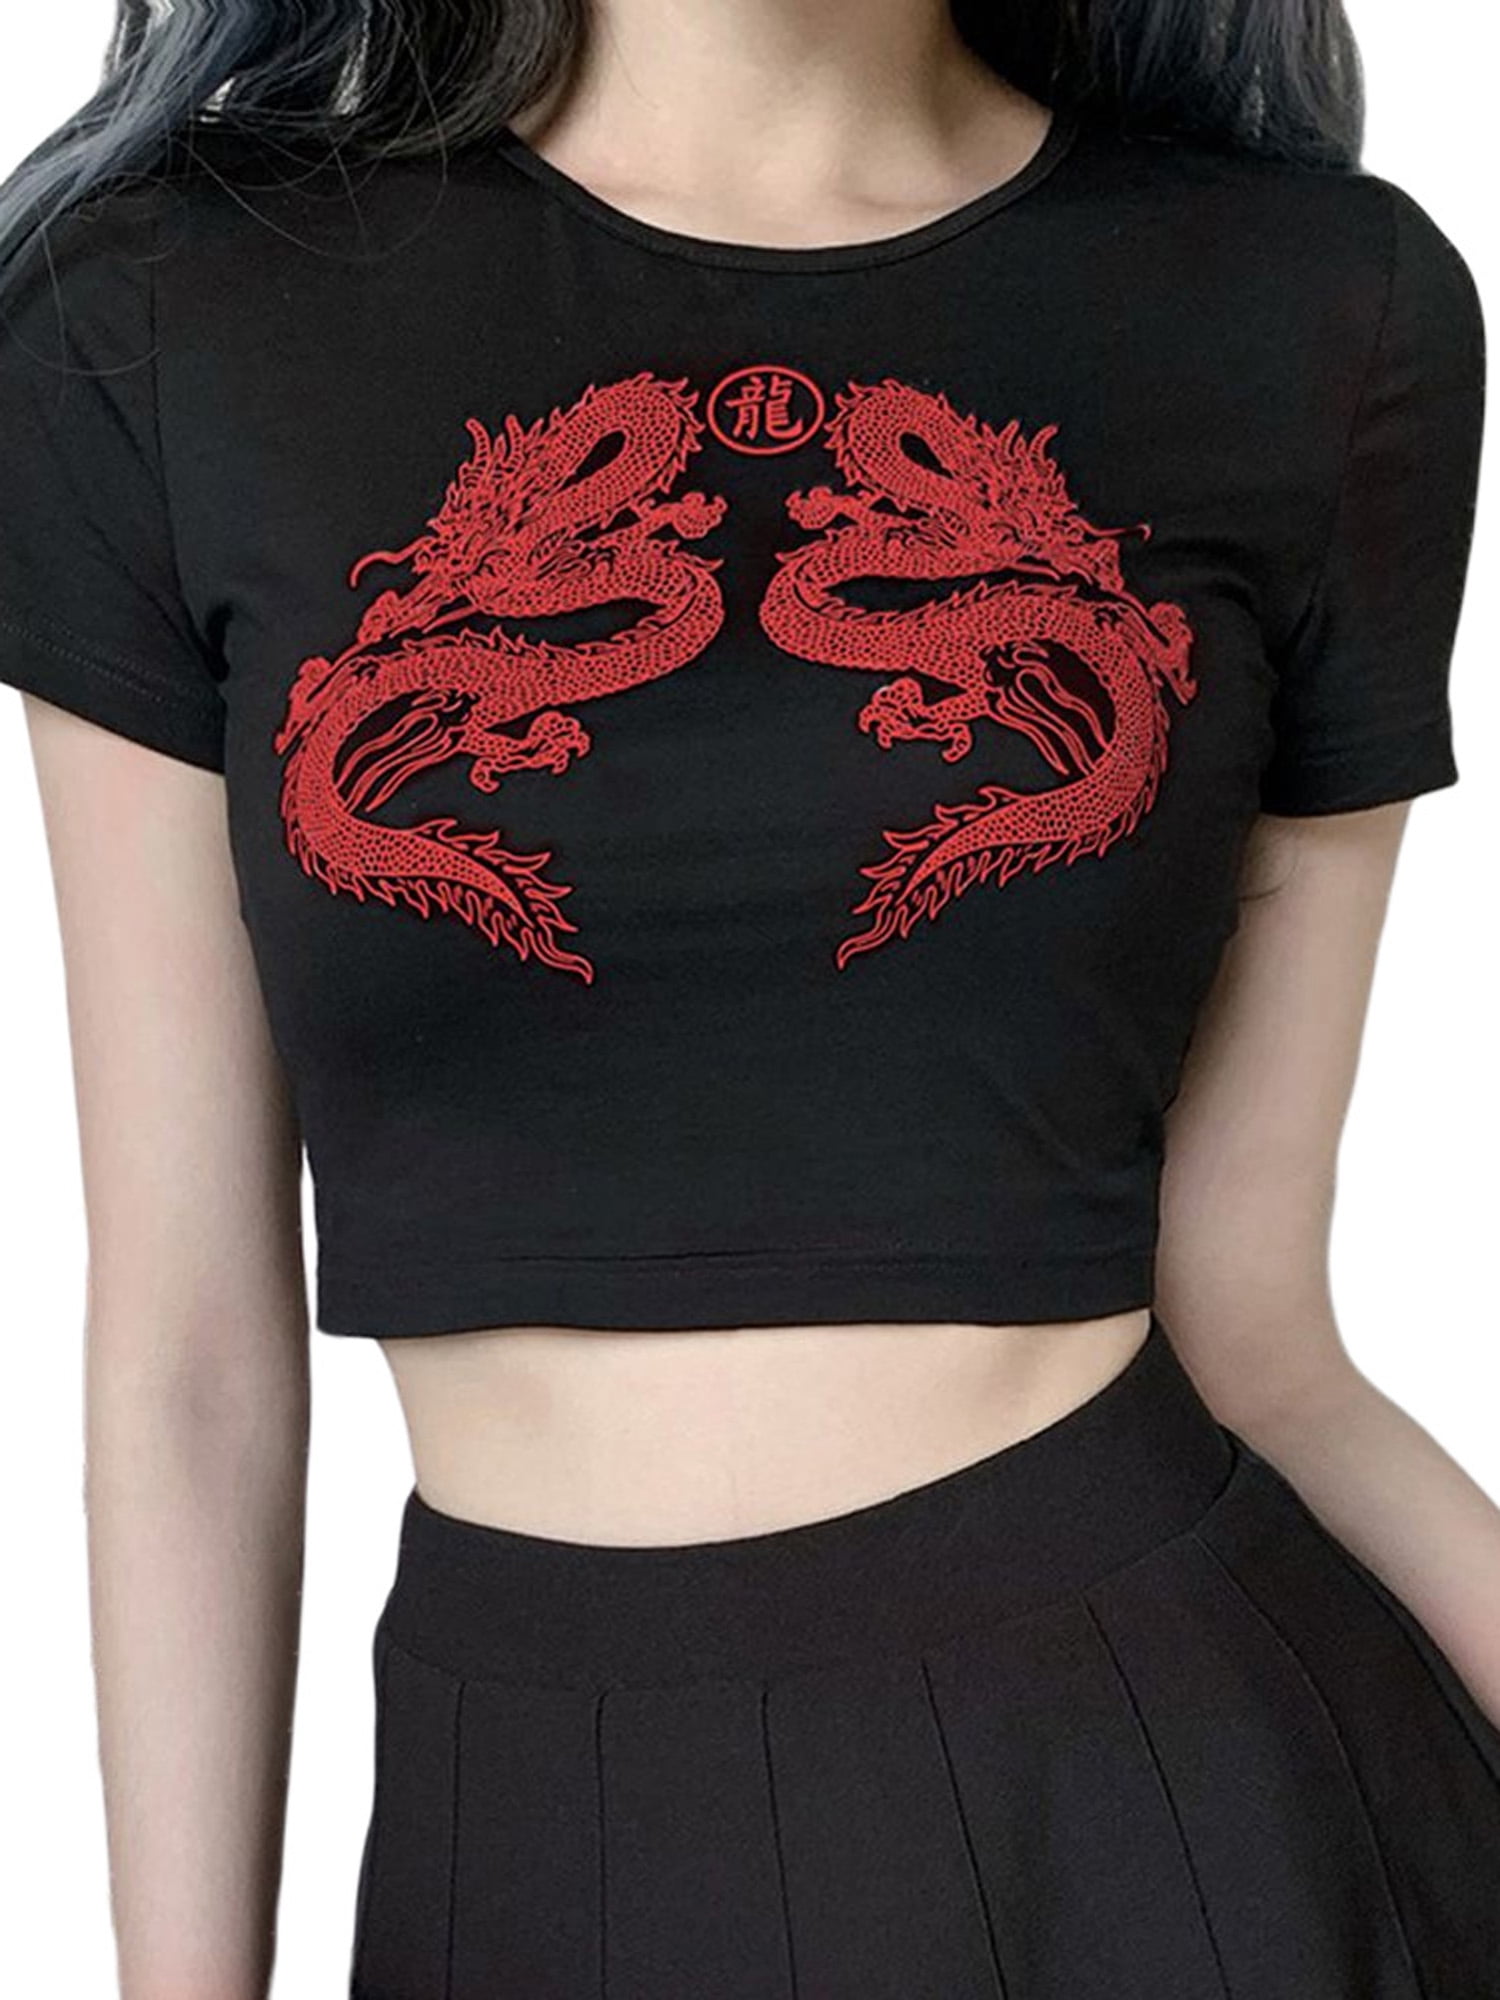 Toimothcn Crop Tops for Women Chinese Character Dragon Print T Shirt Casual Tank Tee Streetwear 